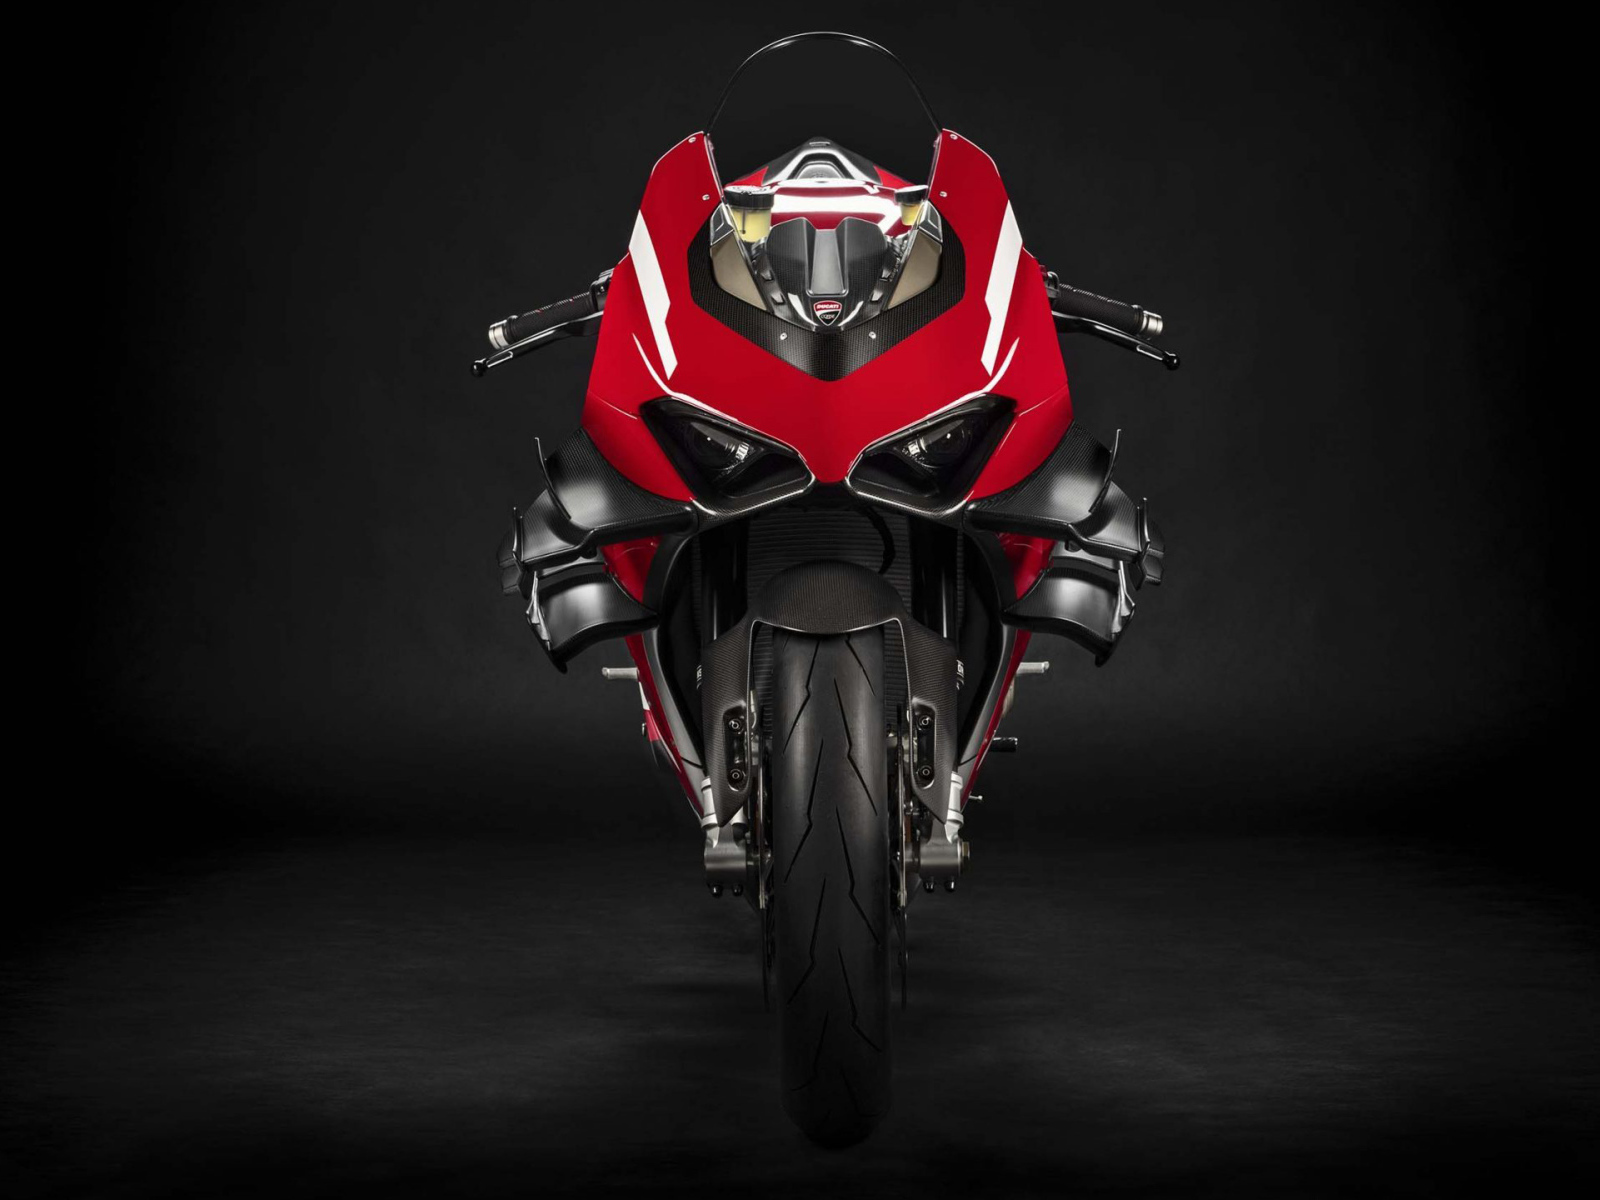 Мотоцикл Ducati Superleggera V4, 2020 года на сером фоне вид спереди